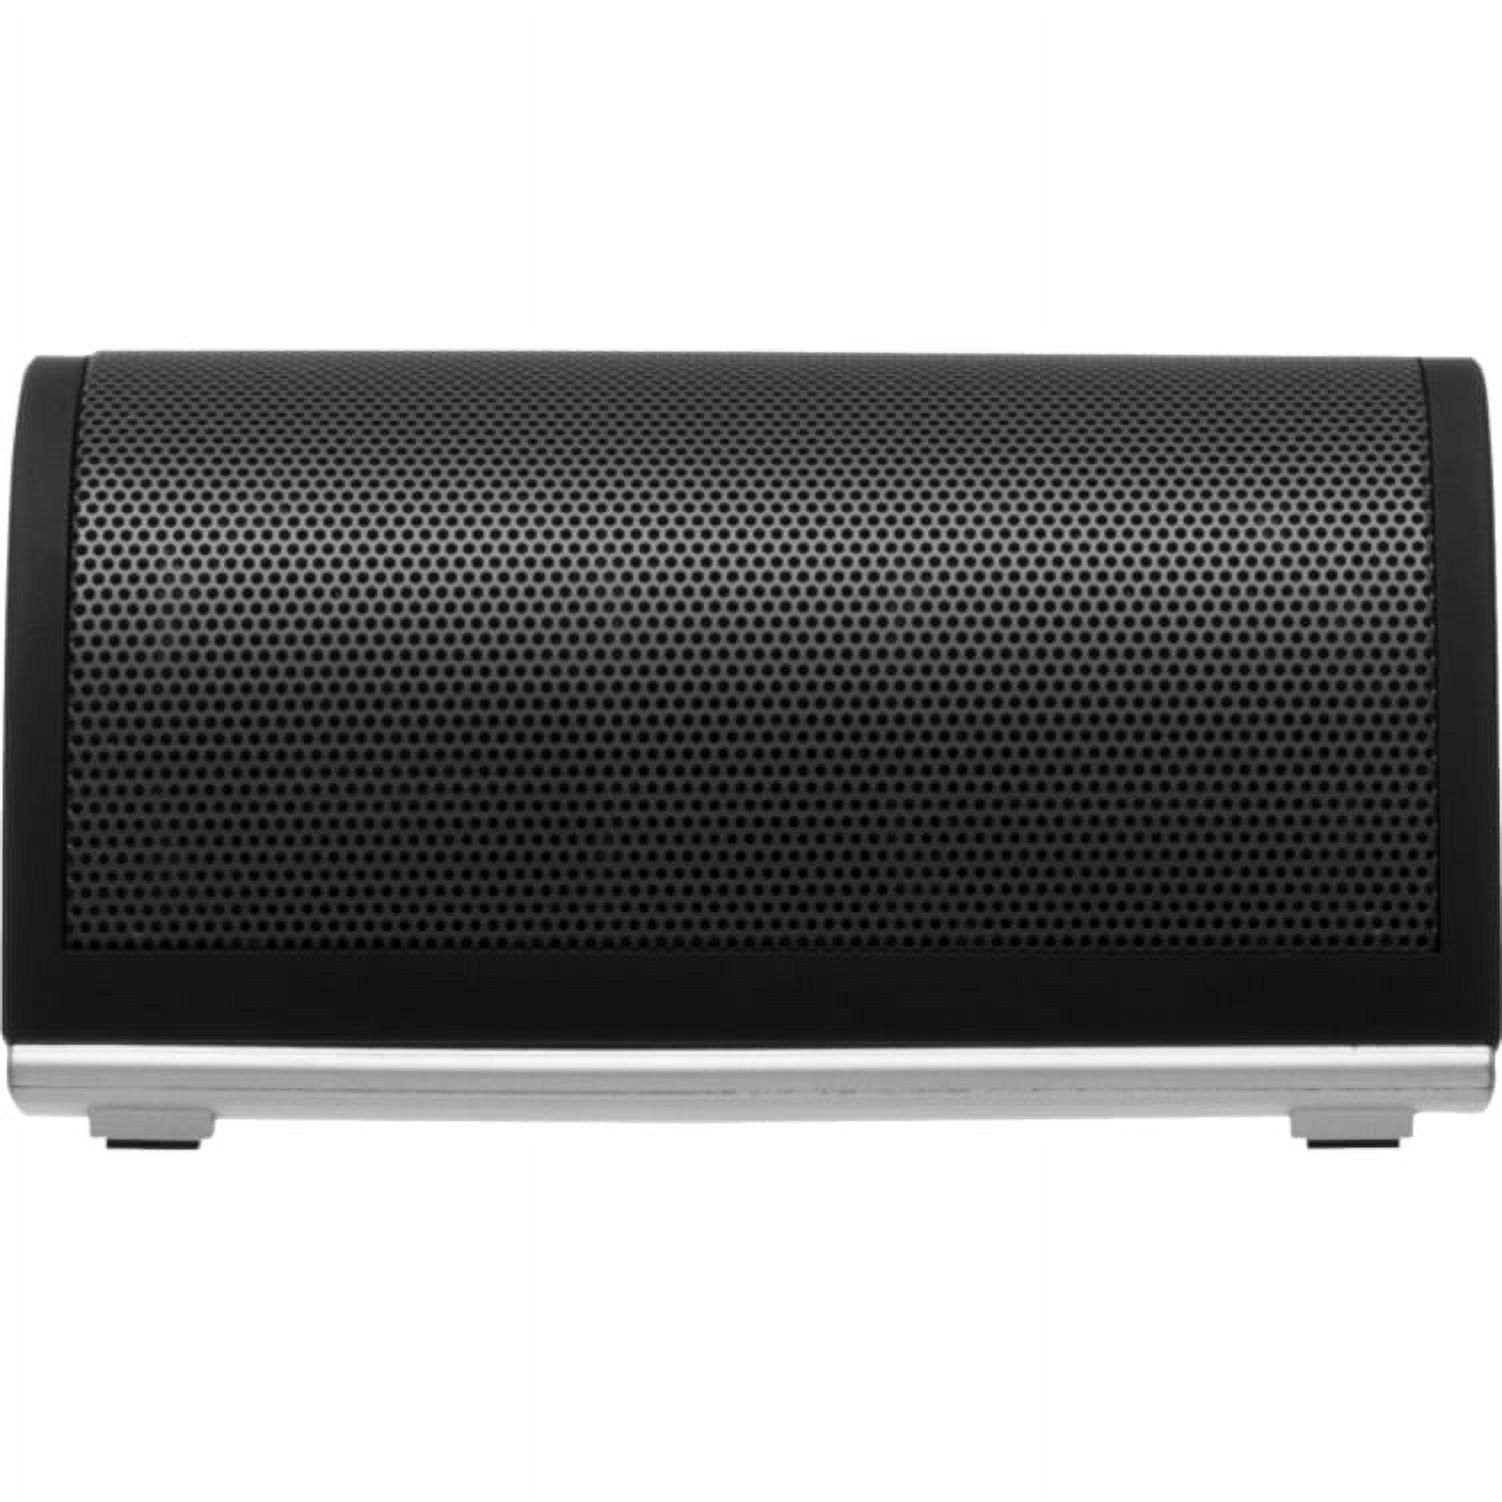 Nyne Portable Bluetooth Speaker, Black, Nyne Mini - image 3 of 4